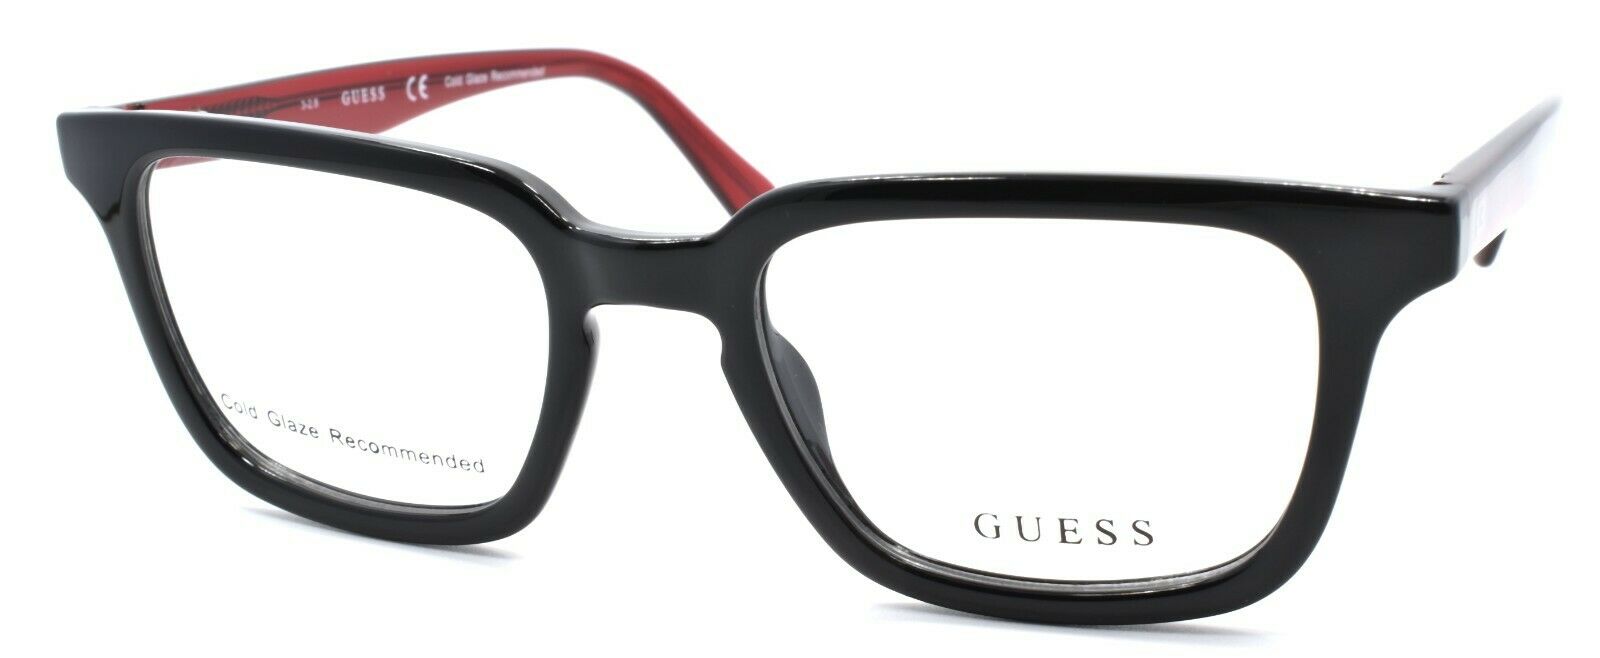 1-GUESS GU1962 005 Men's Eyeglasses Frames 50-19-145 Black / Red-889214033970-IKSpecs